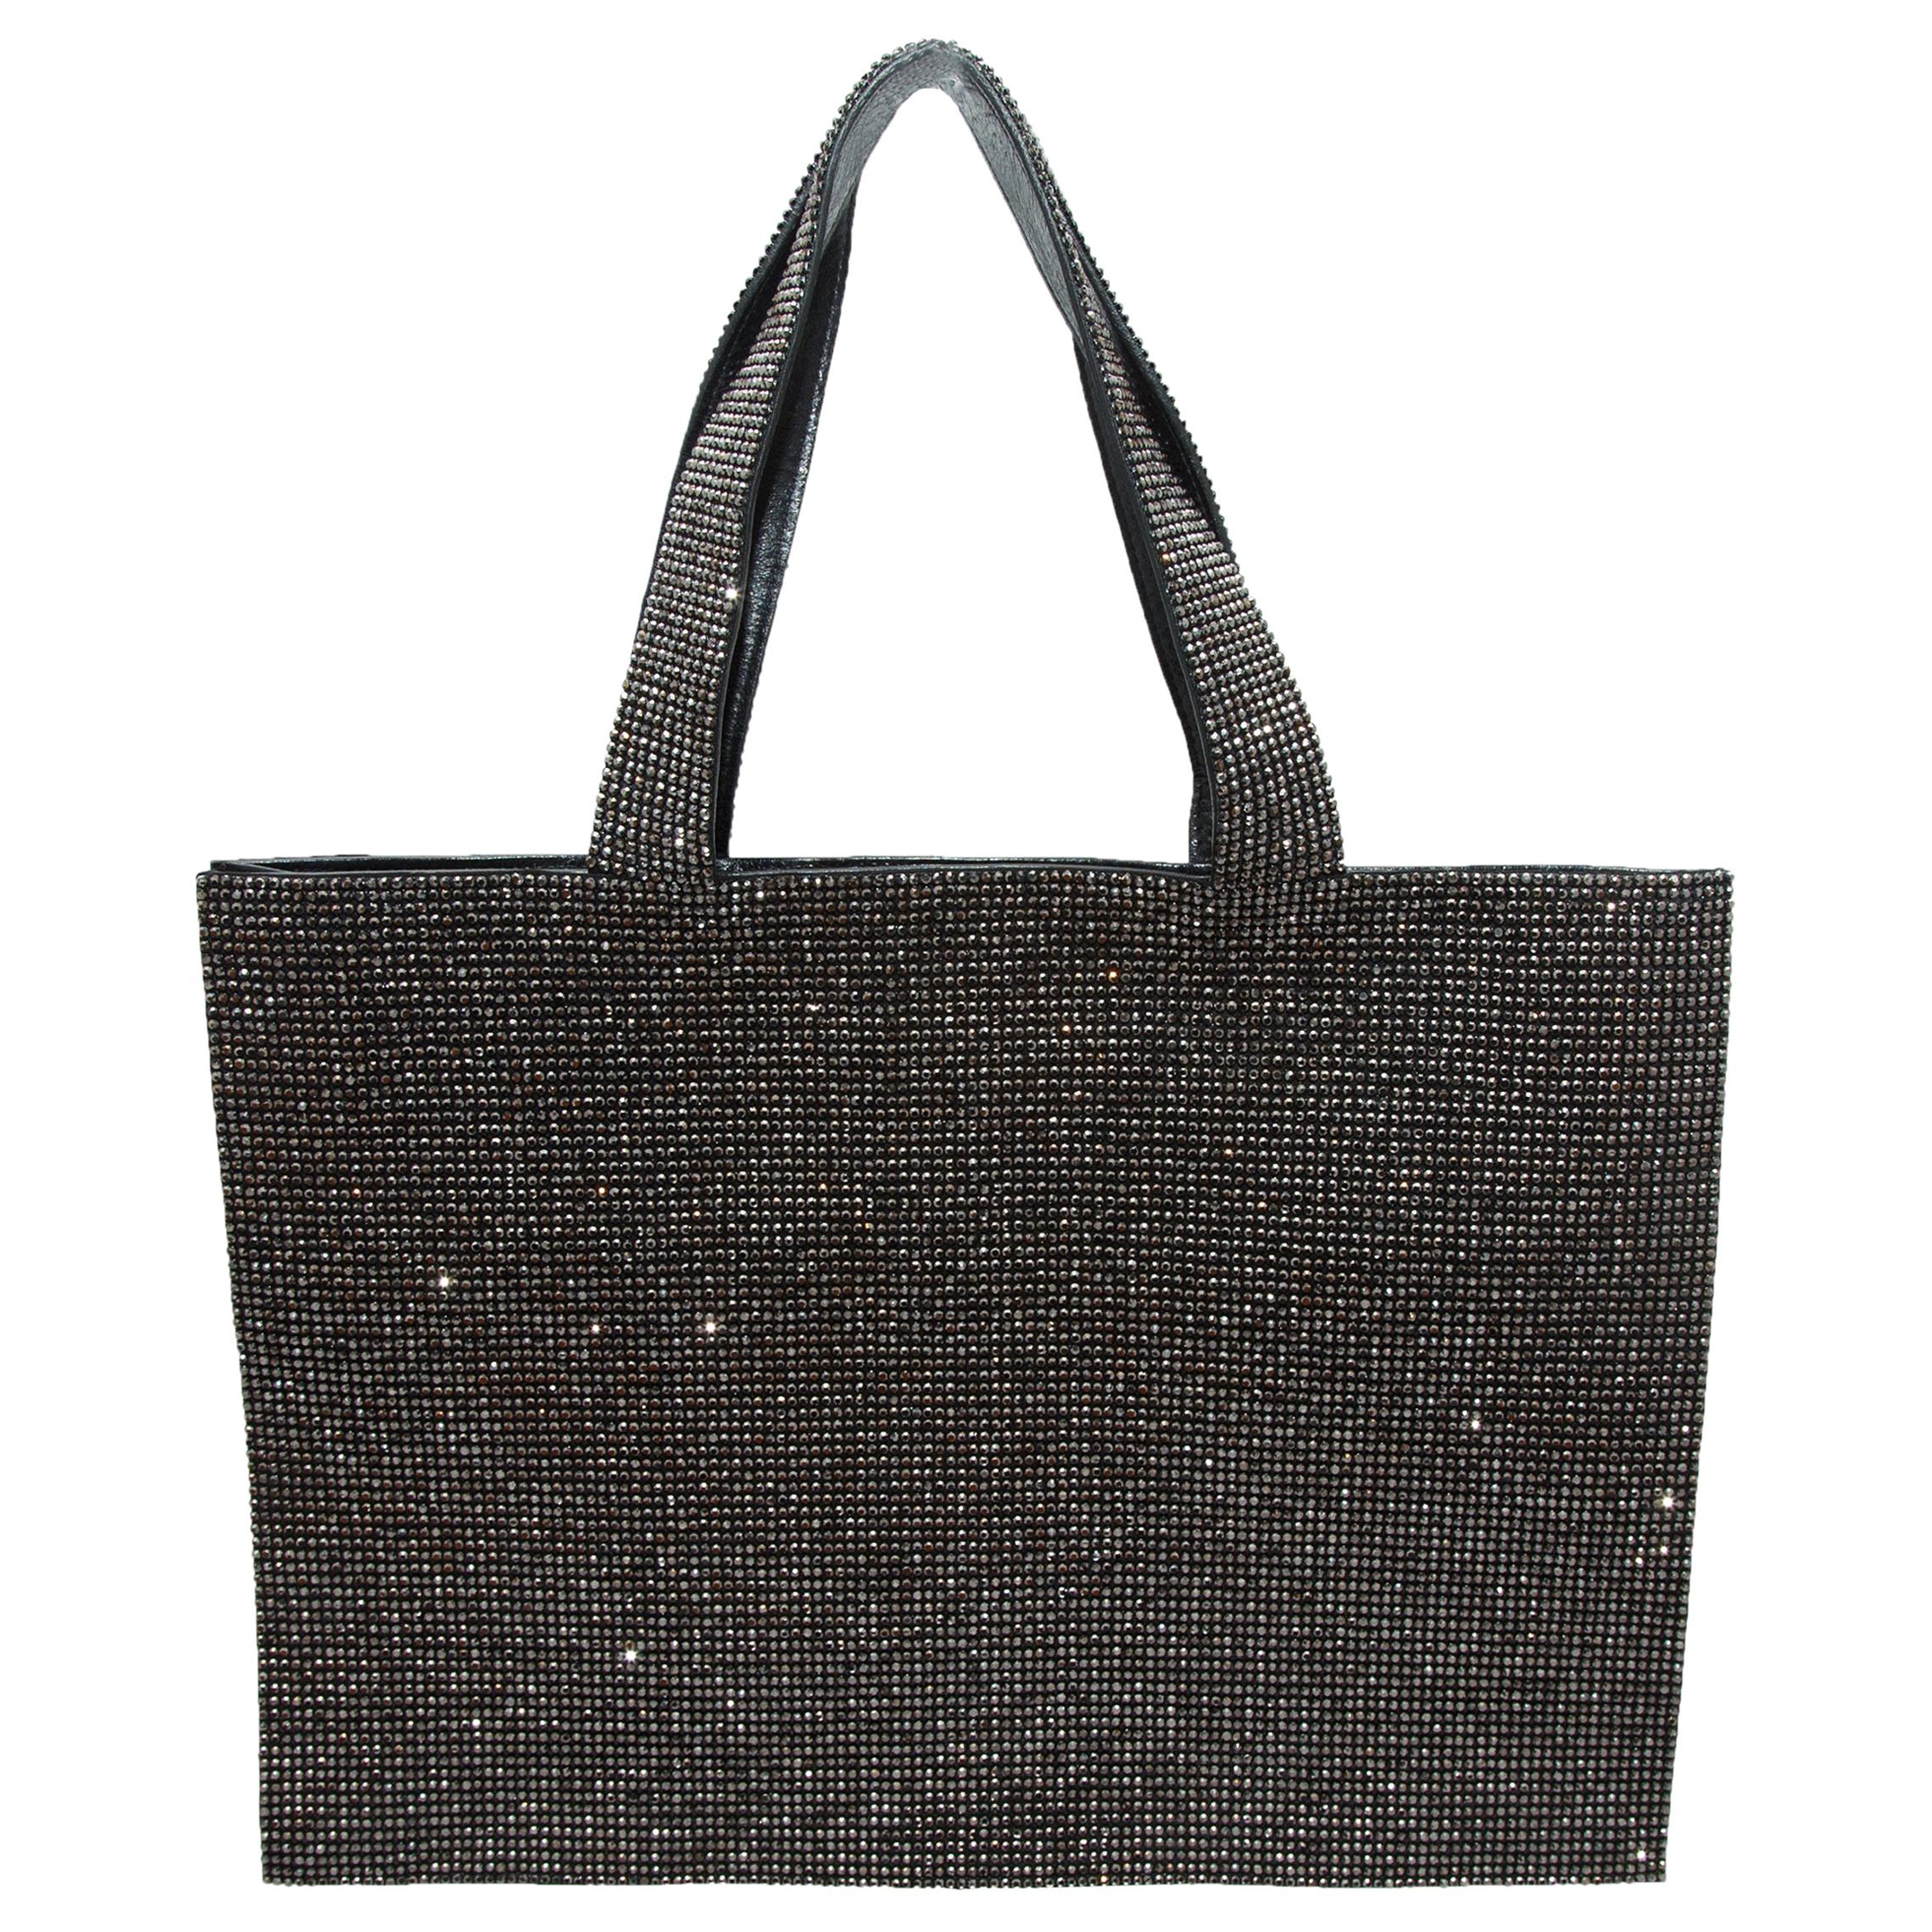 Balmain Silver-Tone & Black Studded Tote Bag